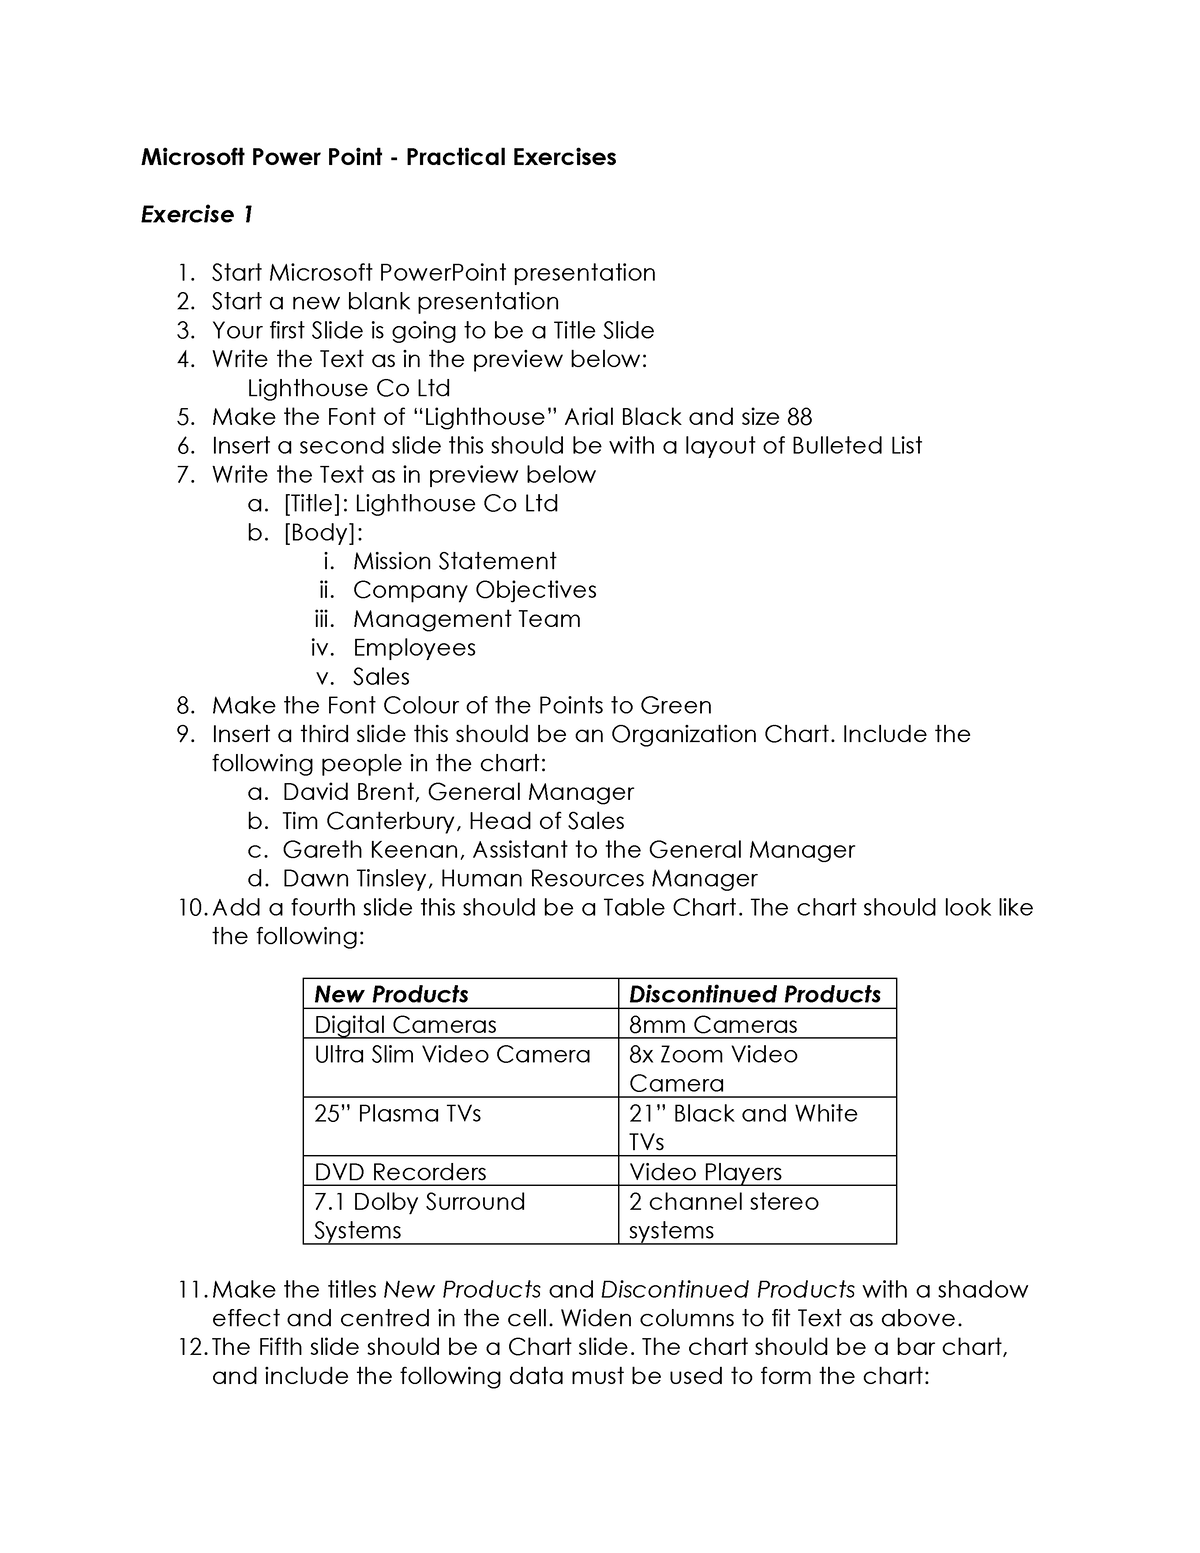 powerpoint presentation practical questions pdf